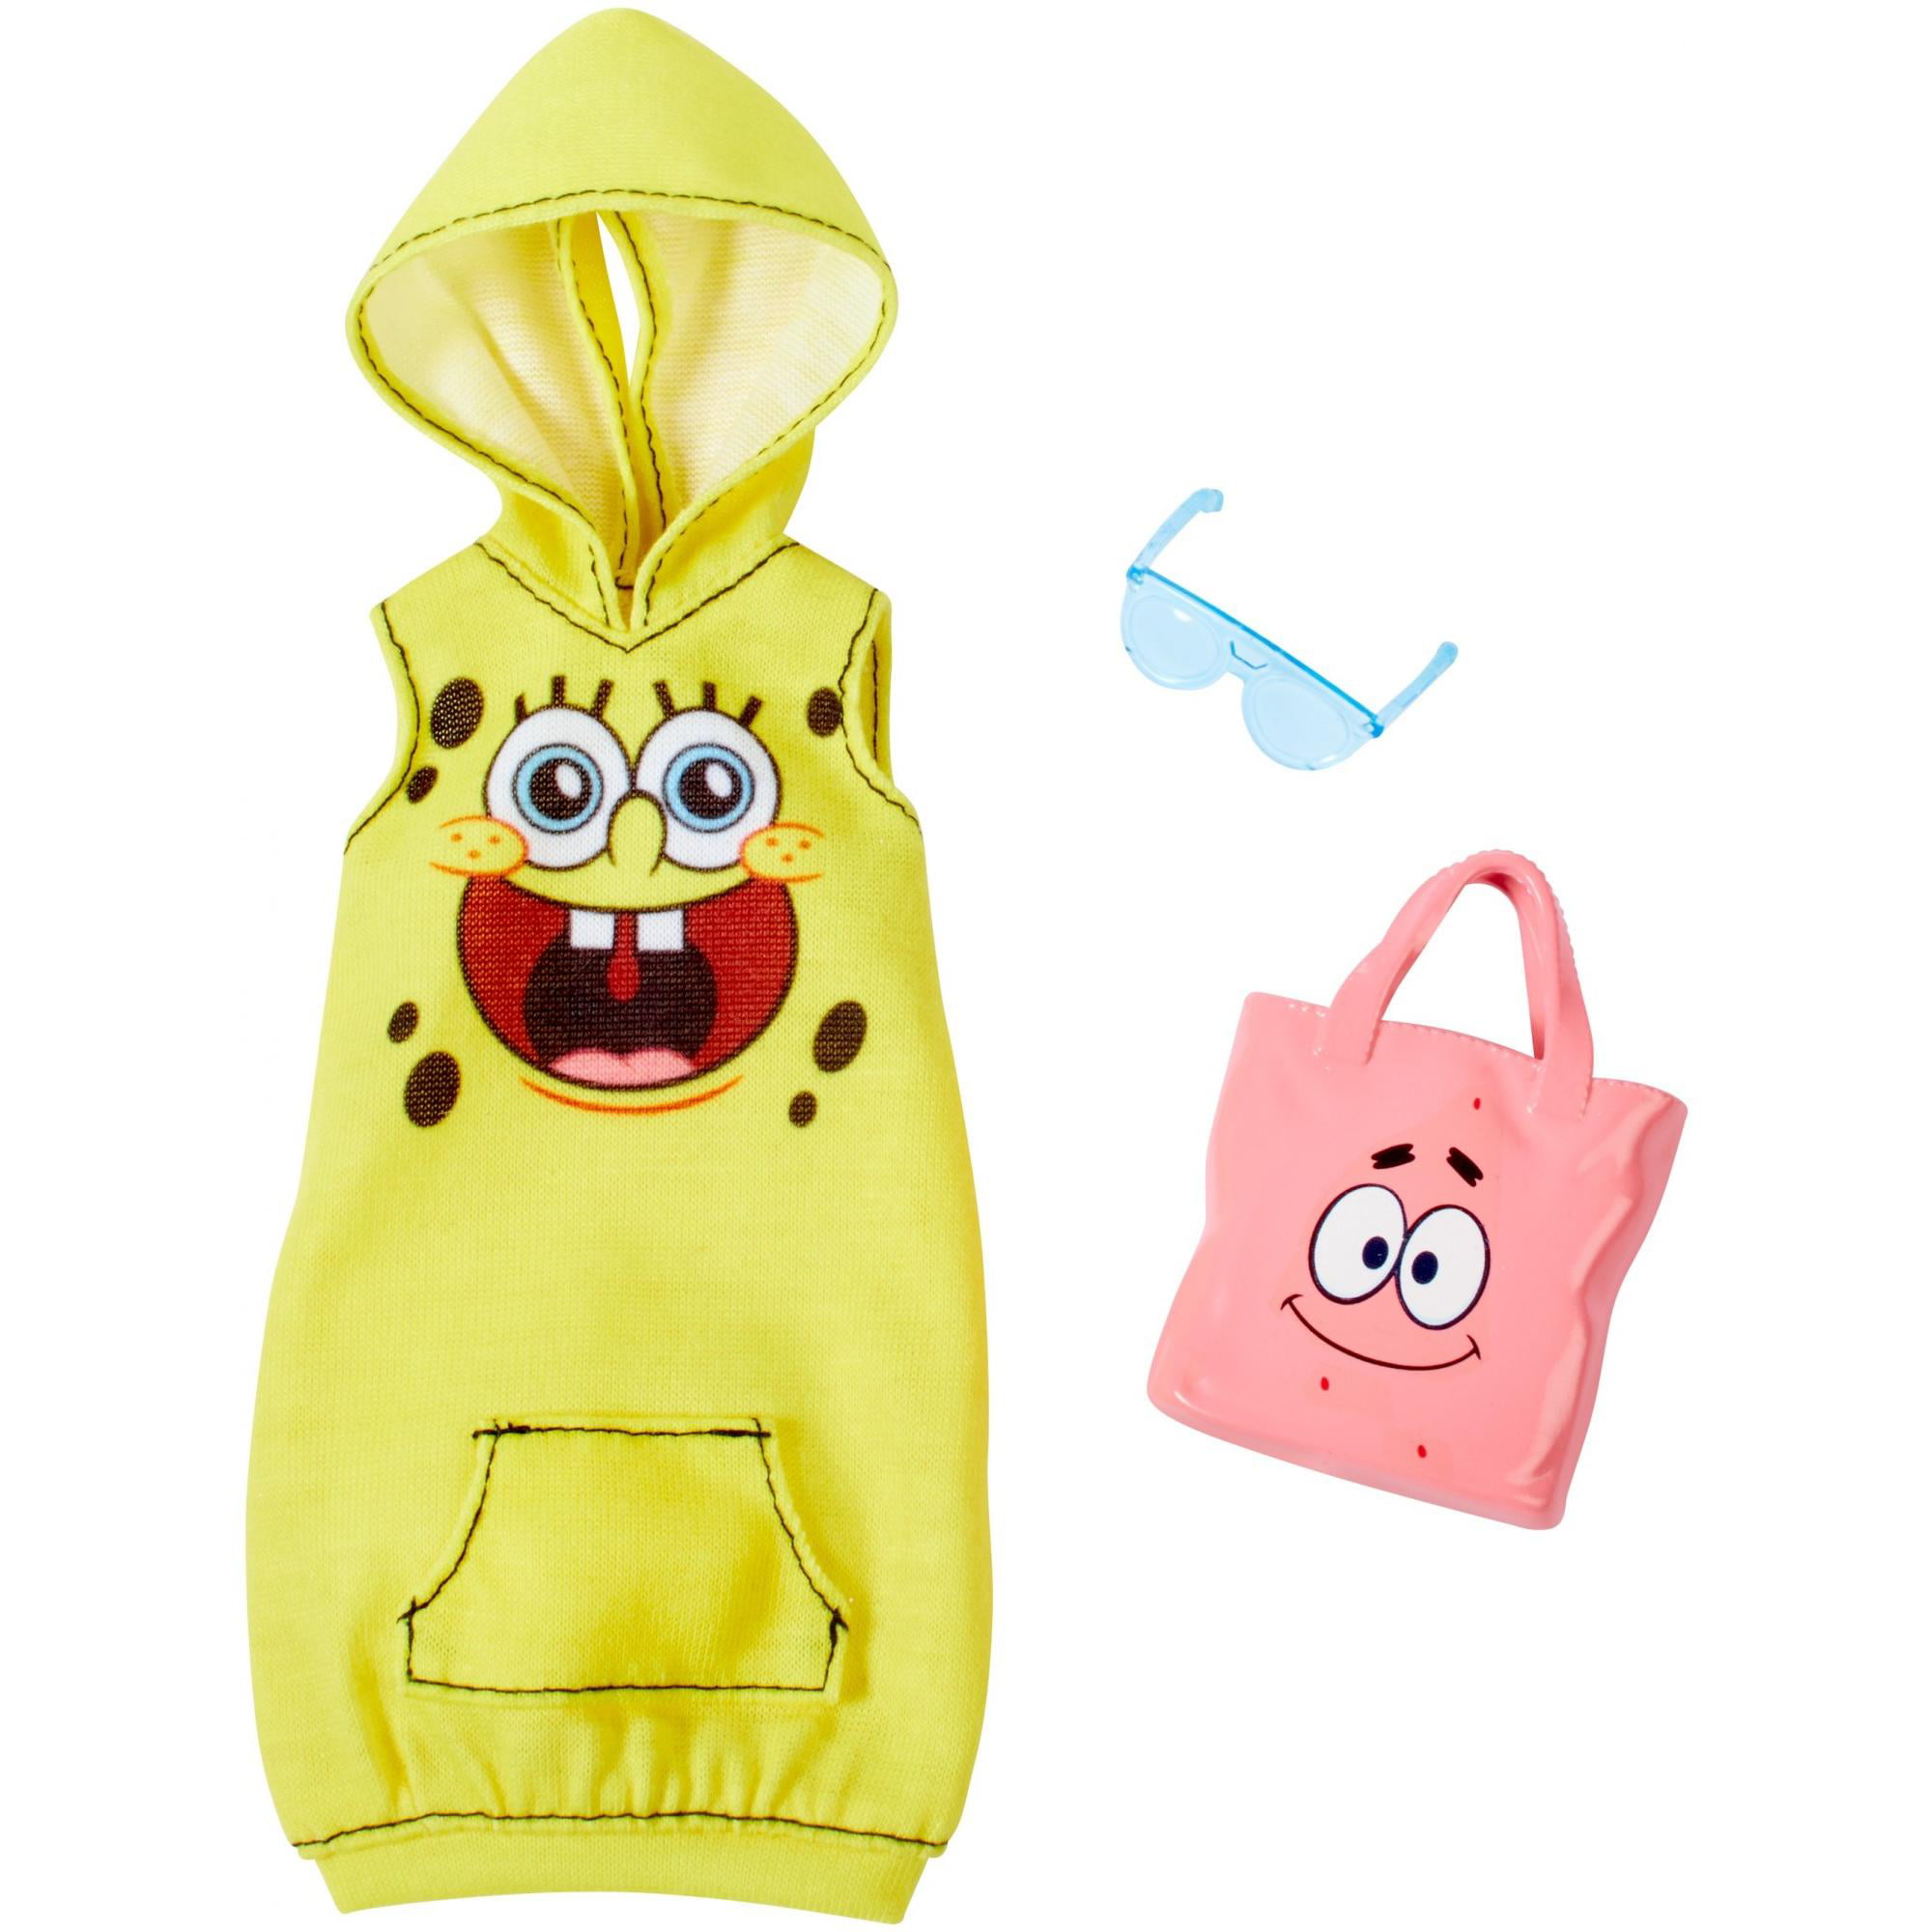 Barbie Spongebob Krabby Patty outfit shirt accesories lot 